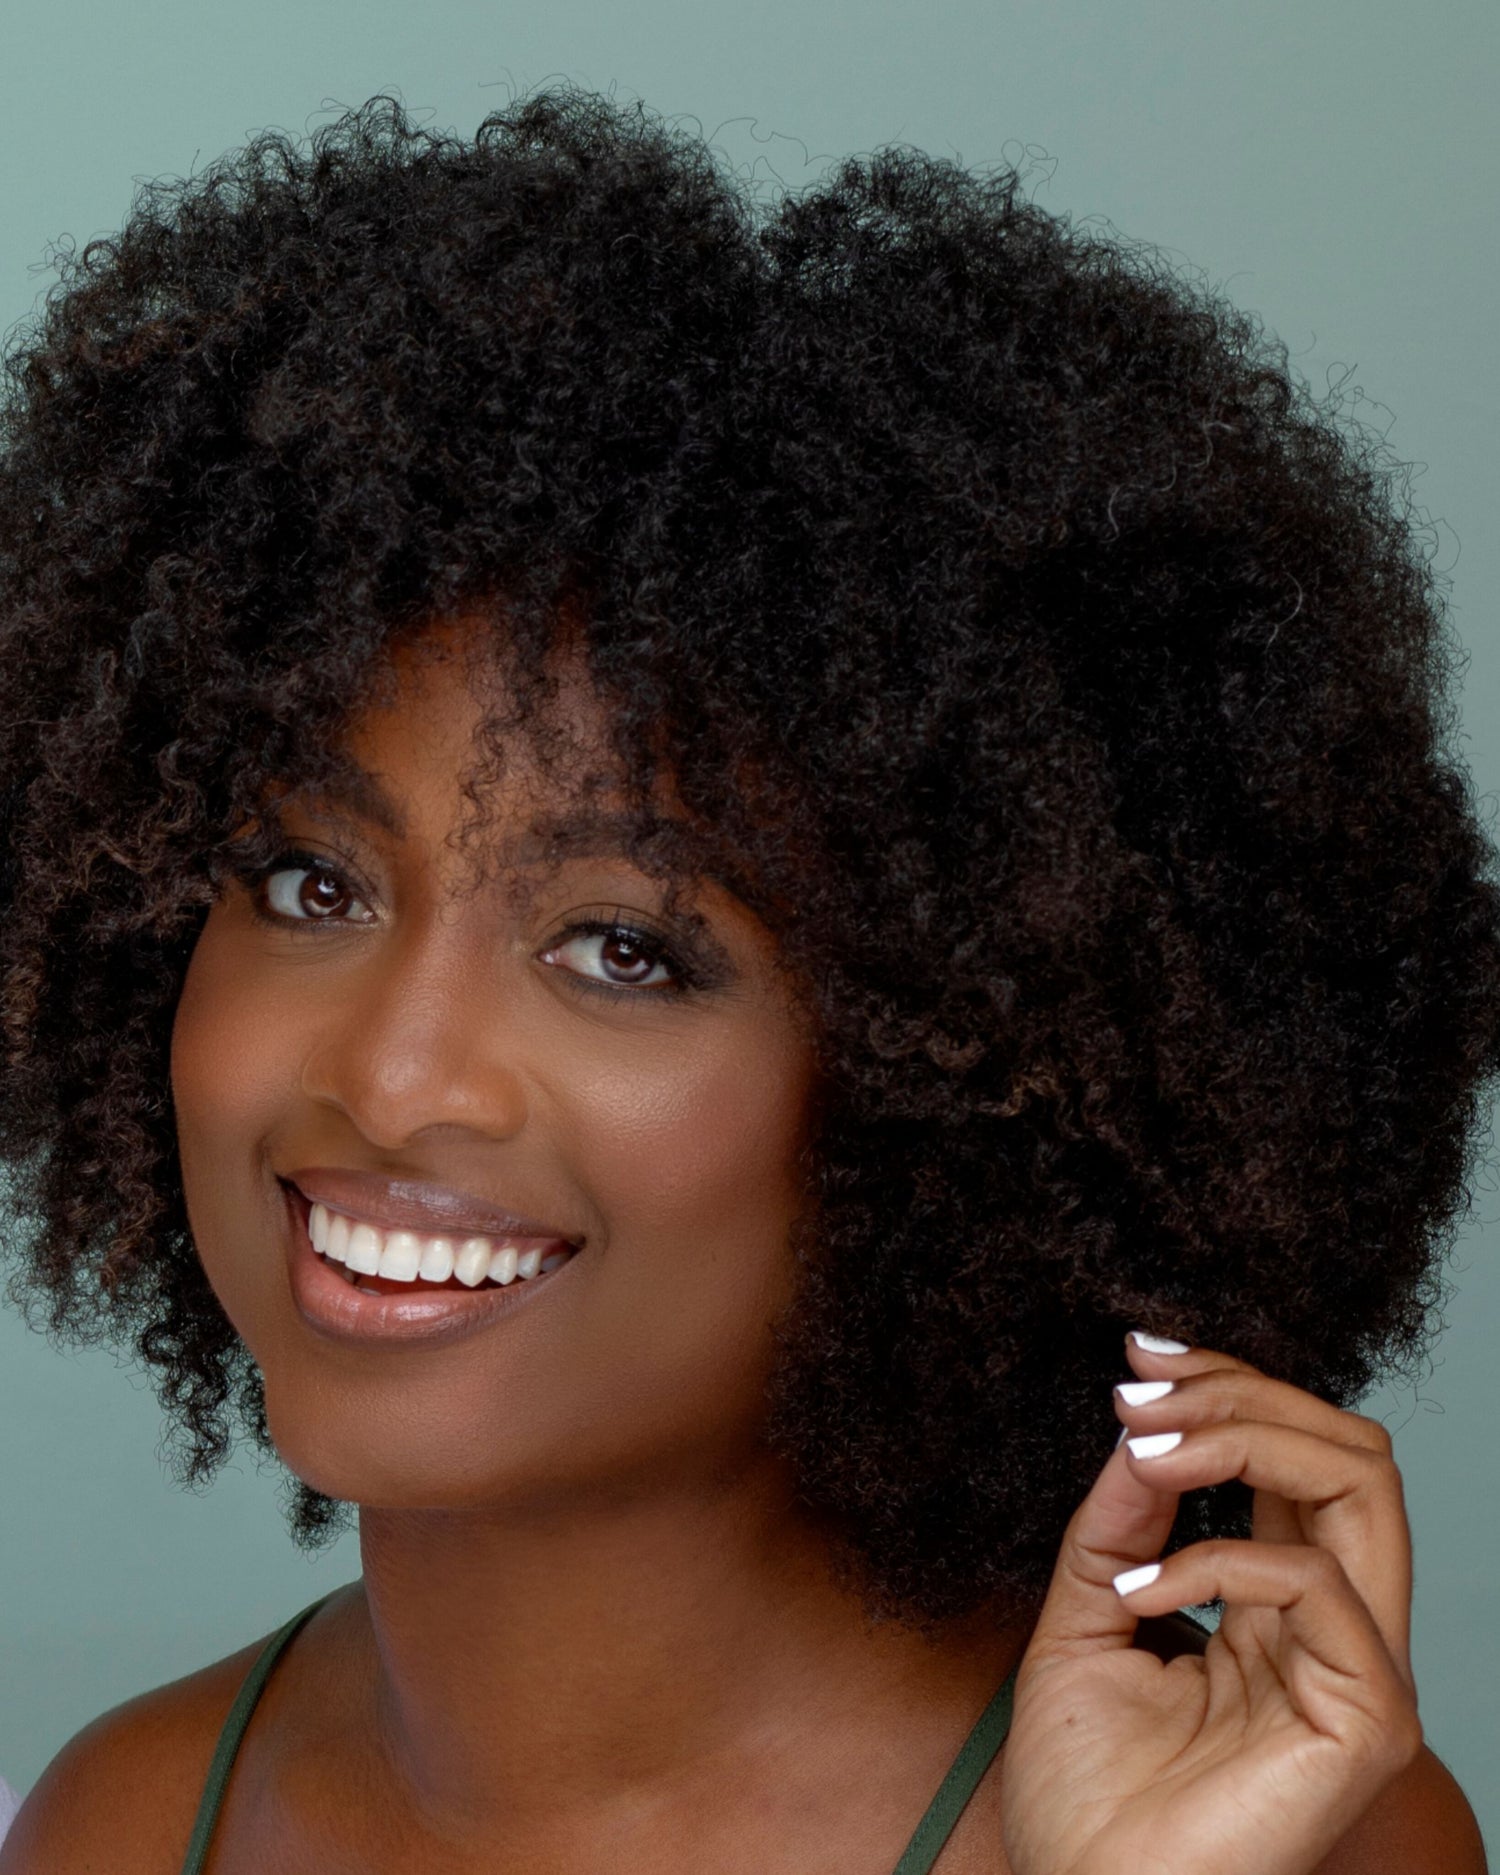 Best Ways To Detangle Curls: Brush, Comb, Or Fingers?